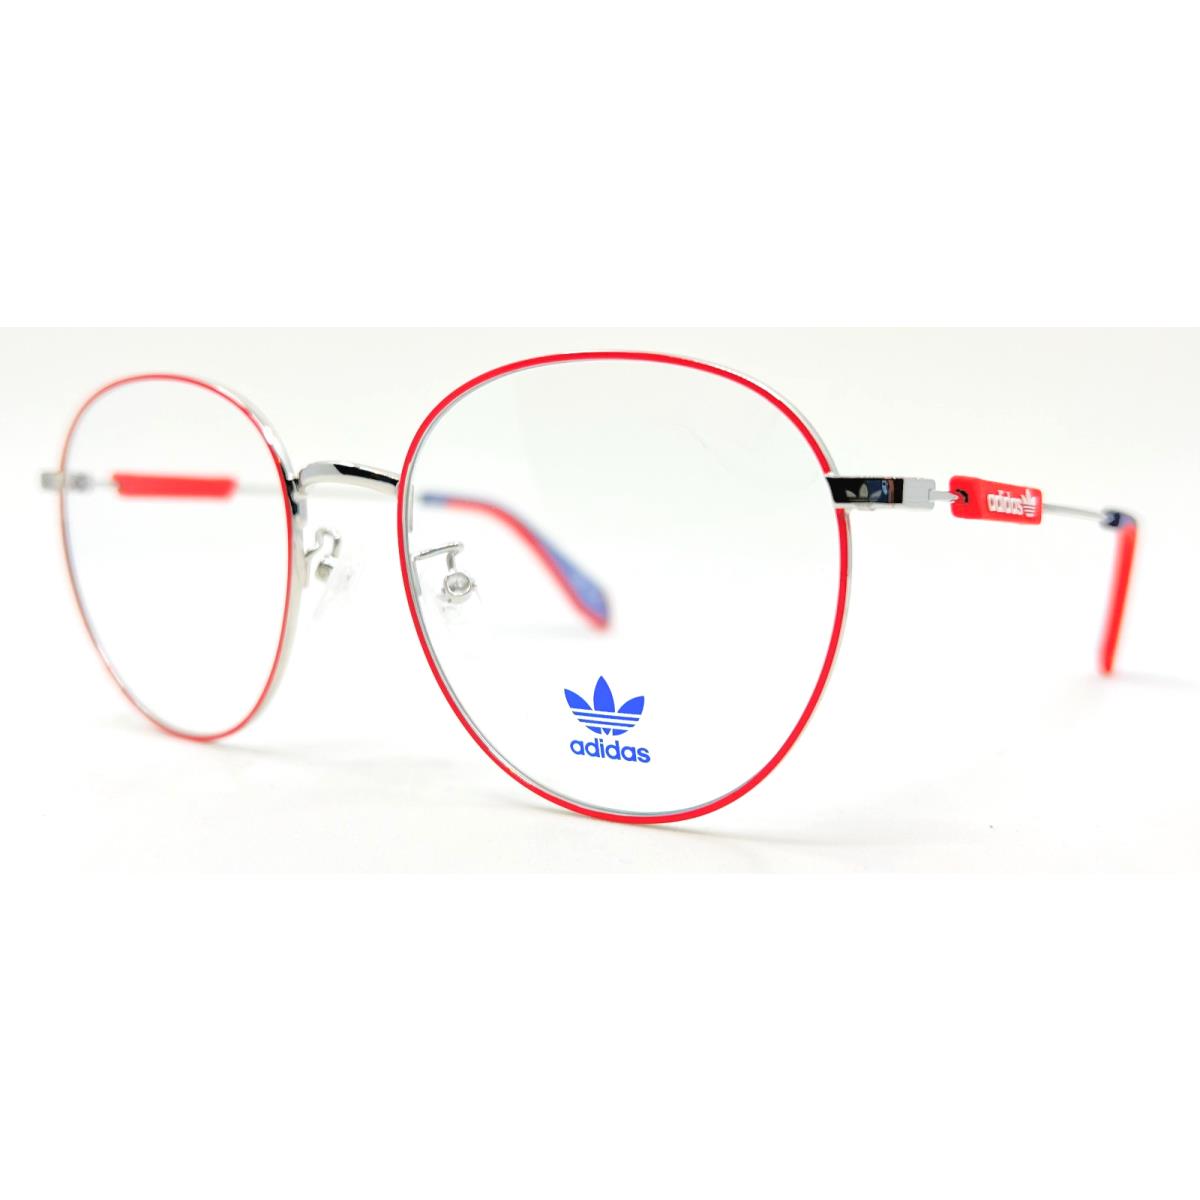 Adidas Originals - OR5033 072 54/19/145 - Orange Eyeglasses Case - Frame: Orange